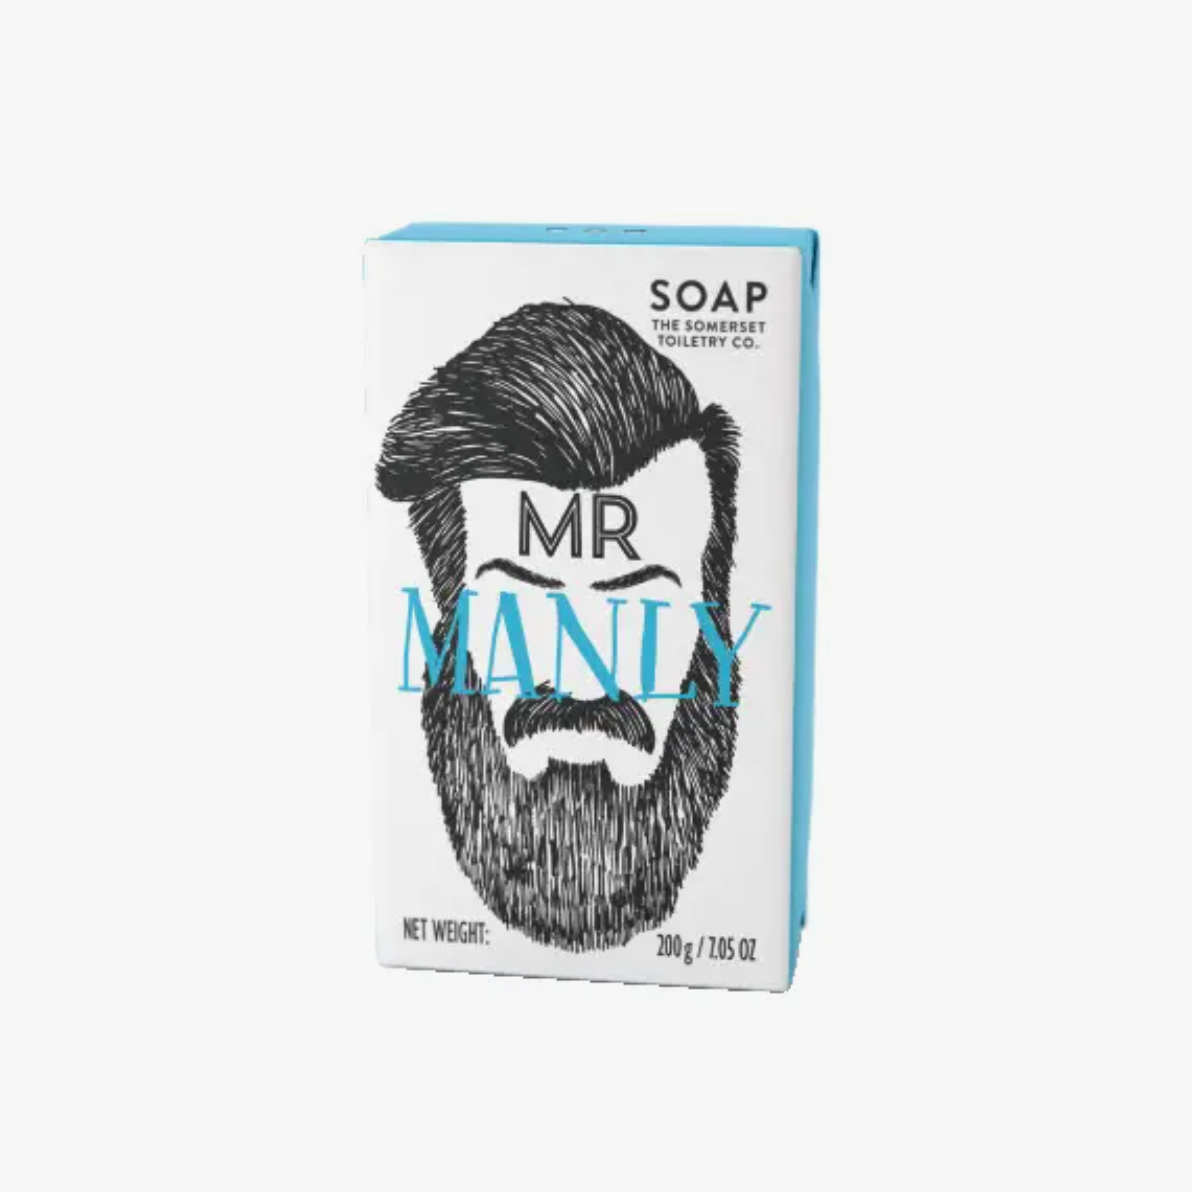 Mr. Perfect Bar Soap